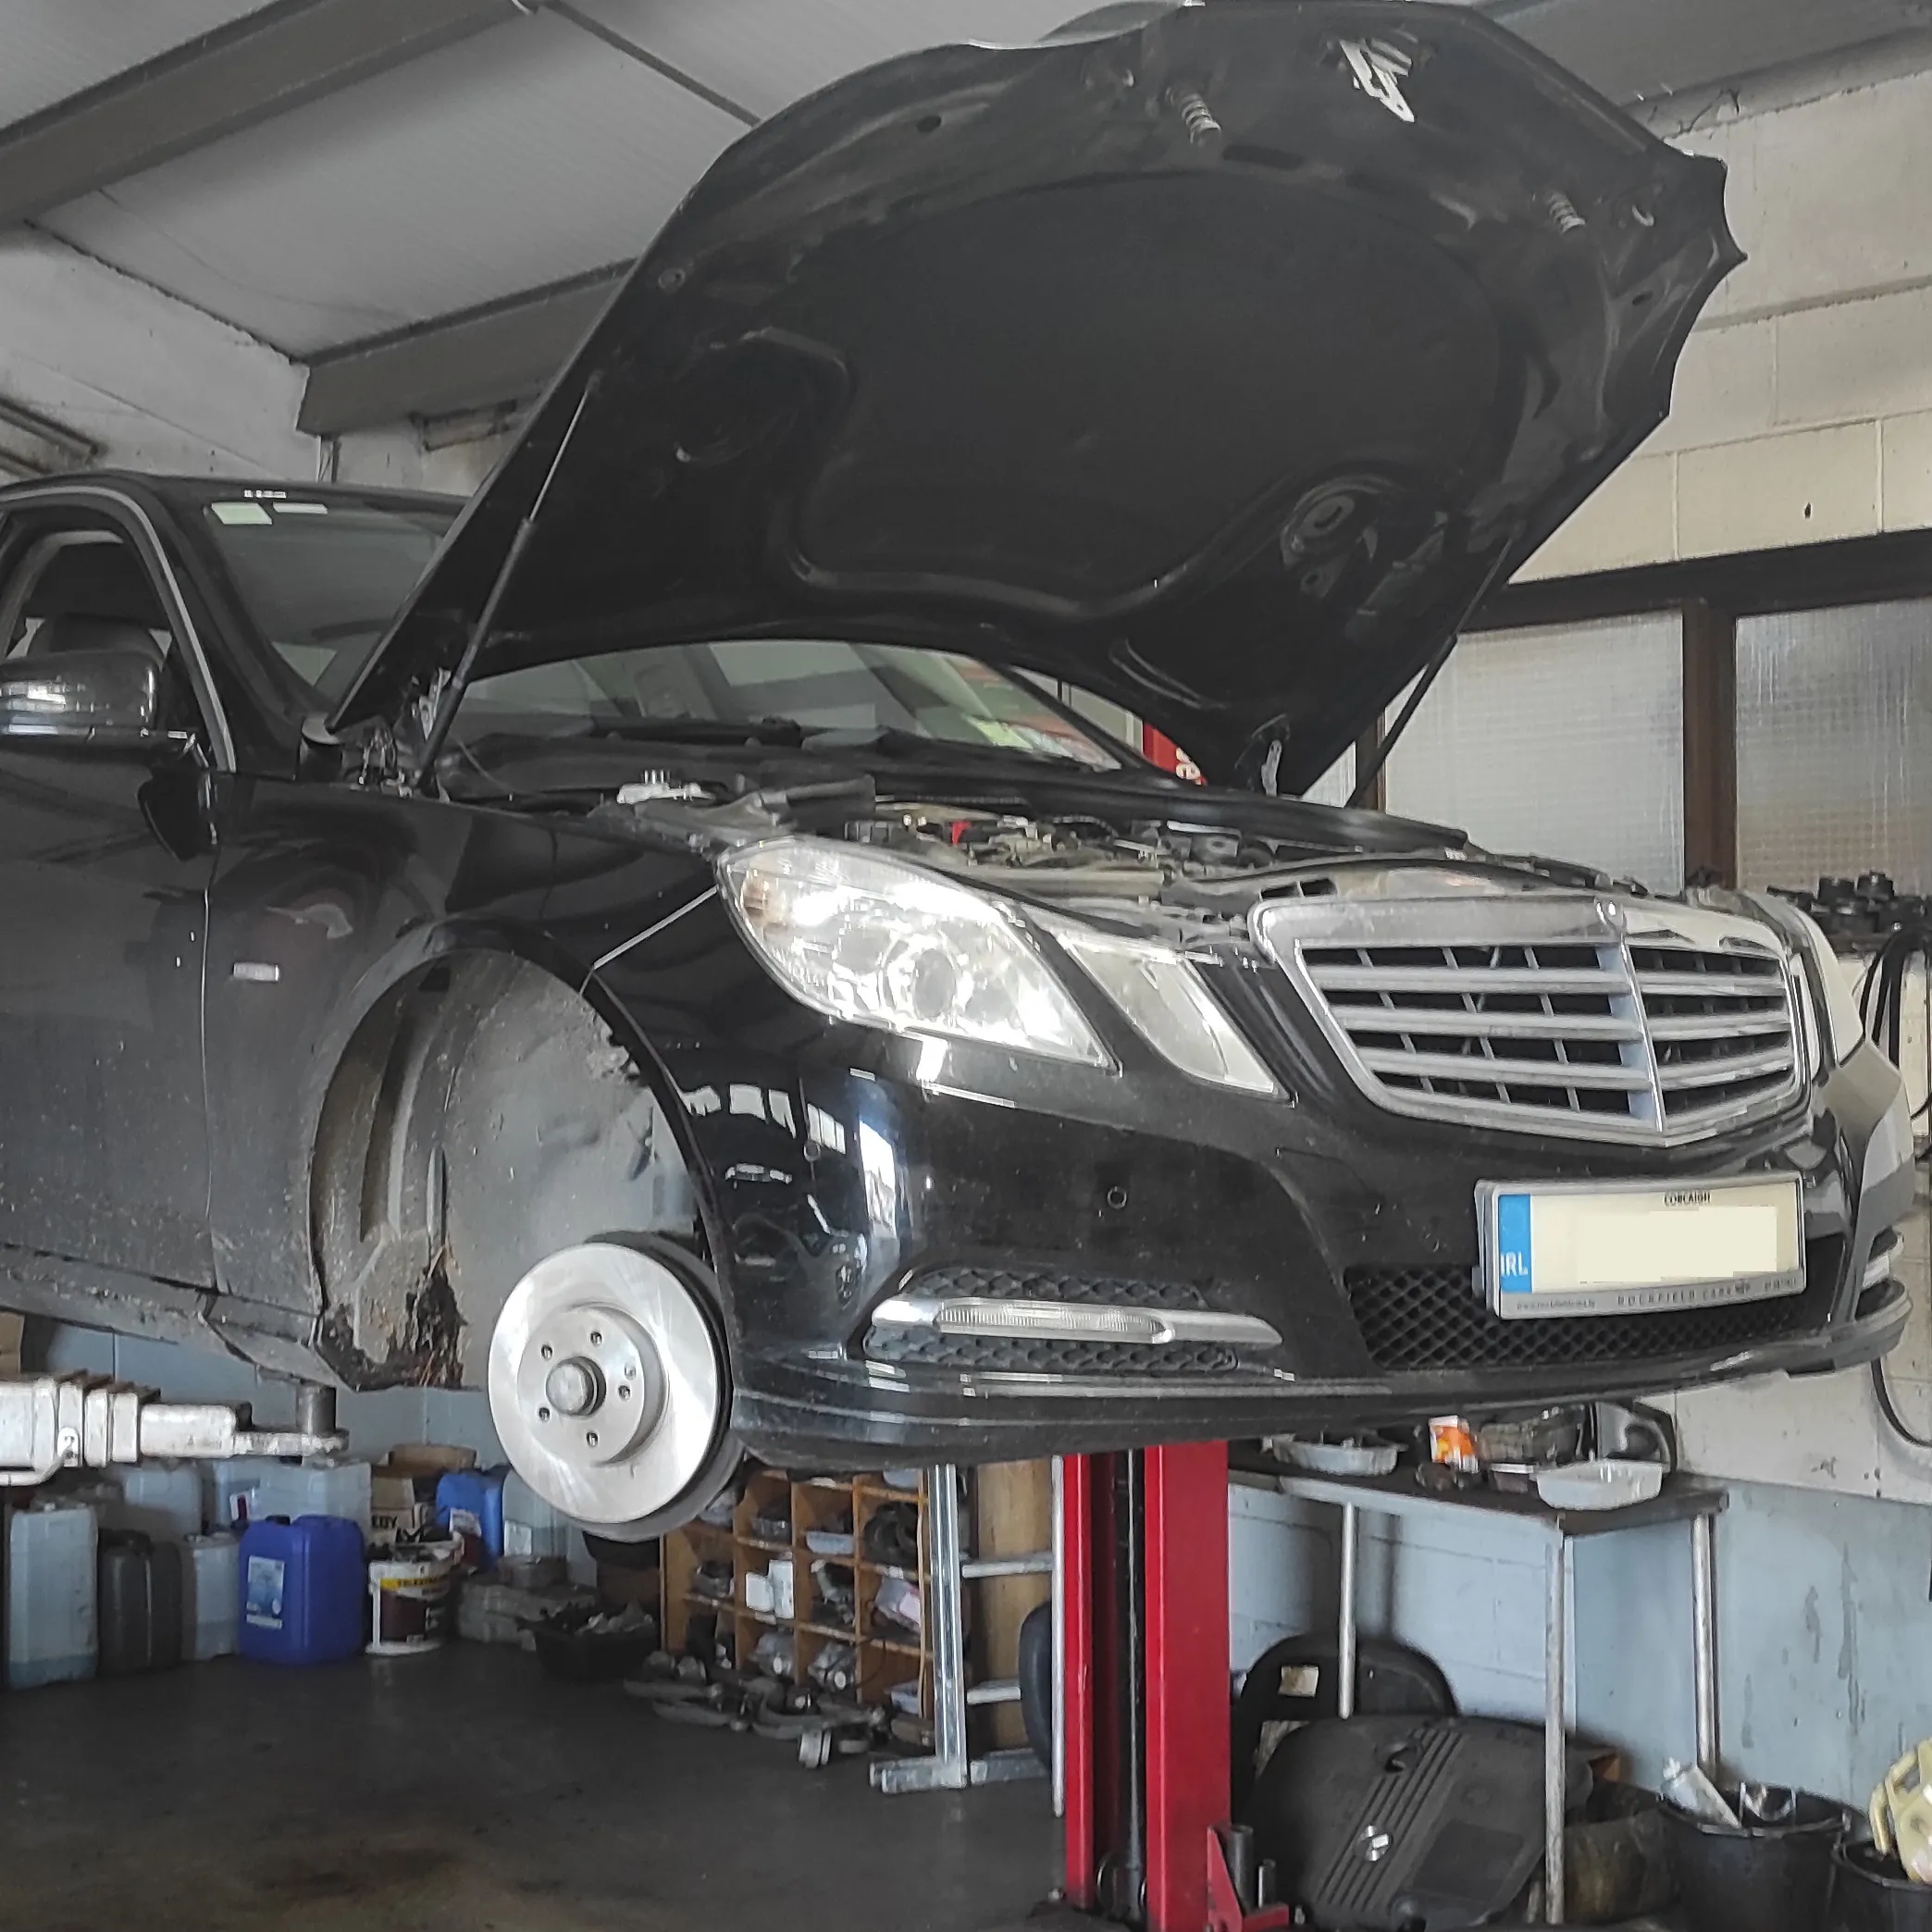 Mercedes repairs